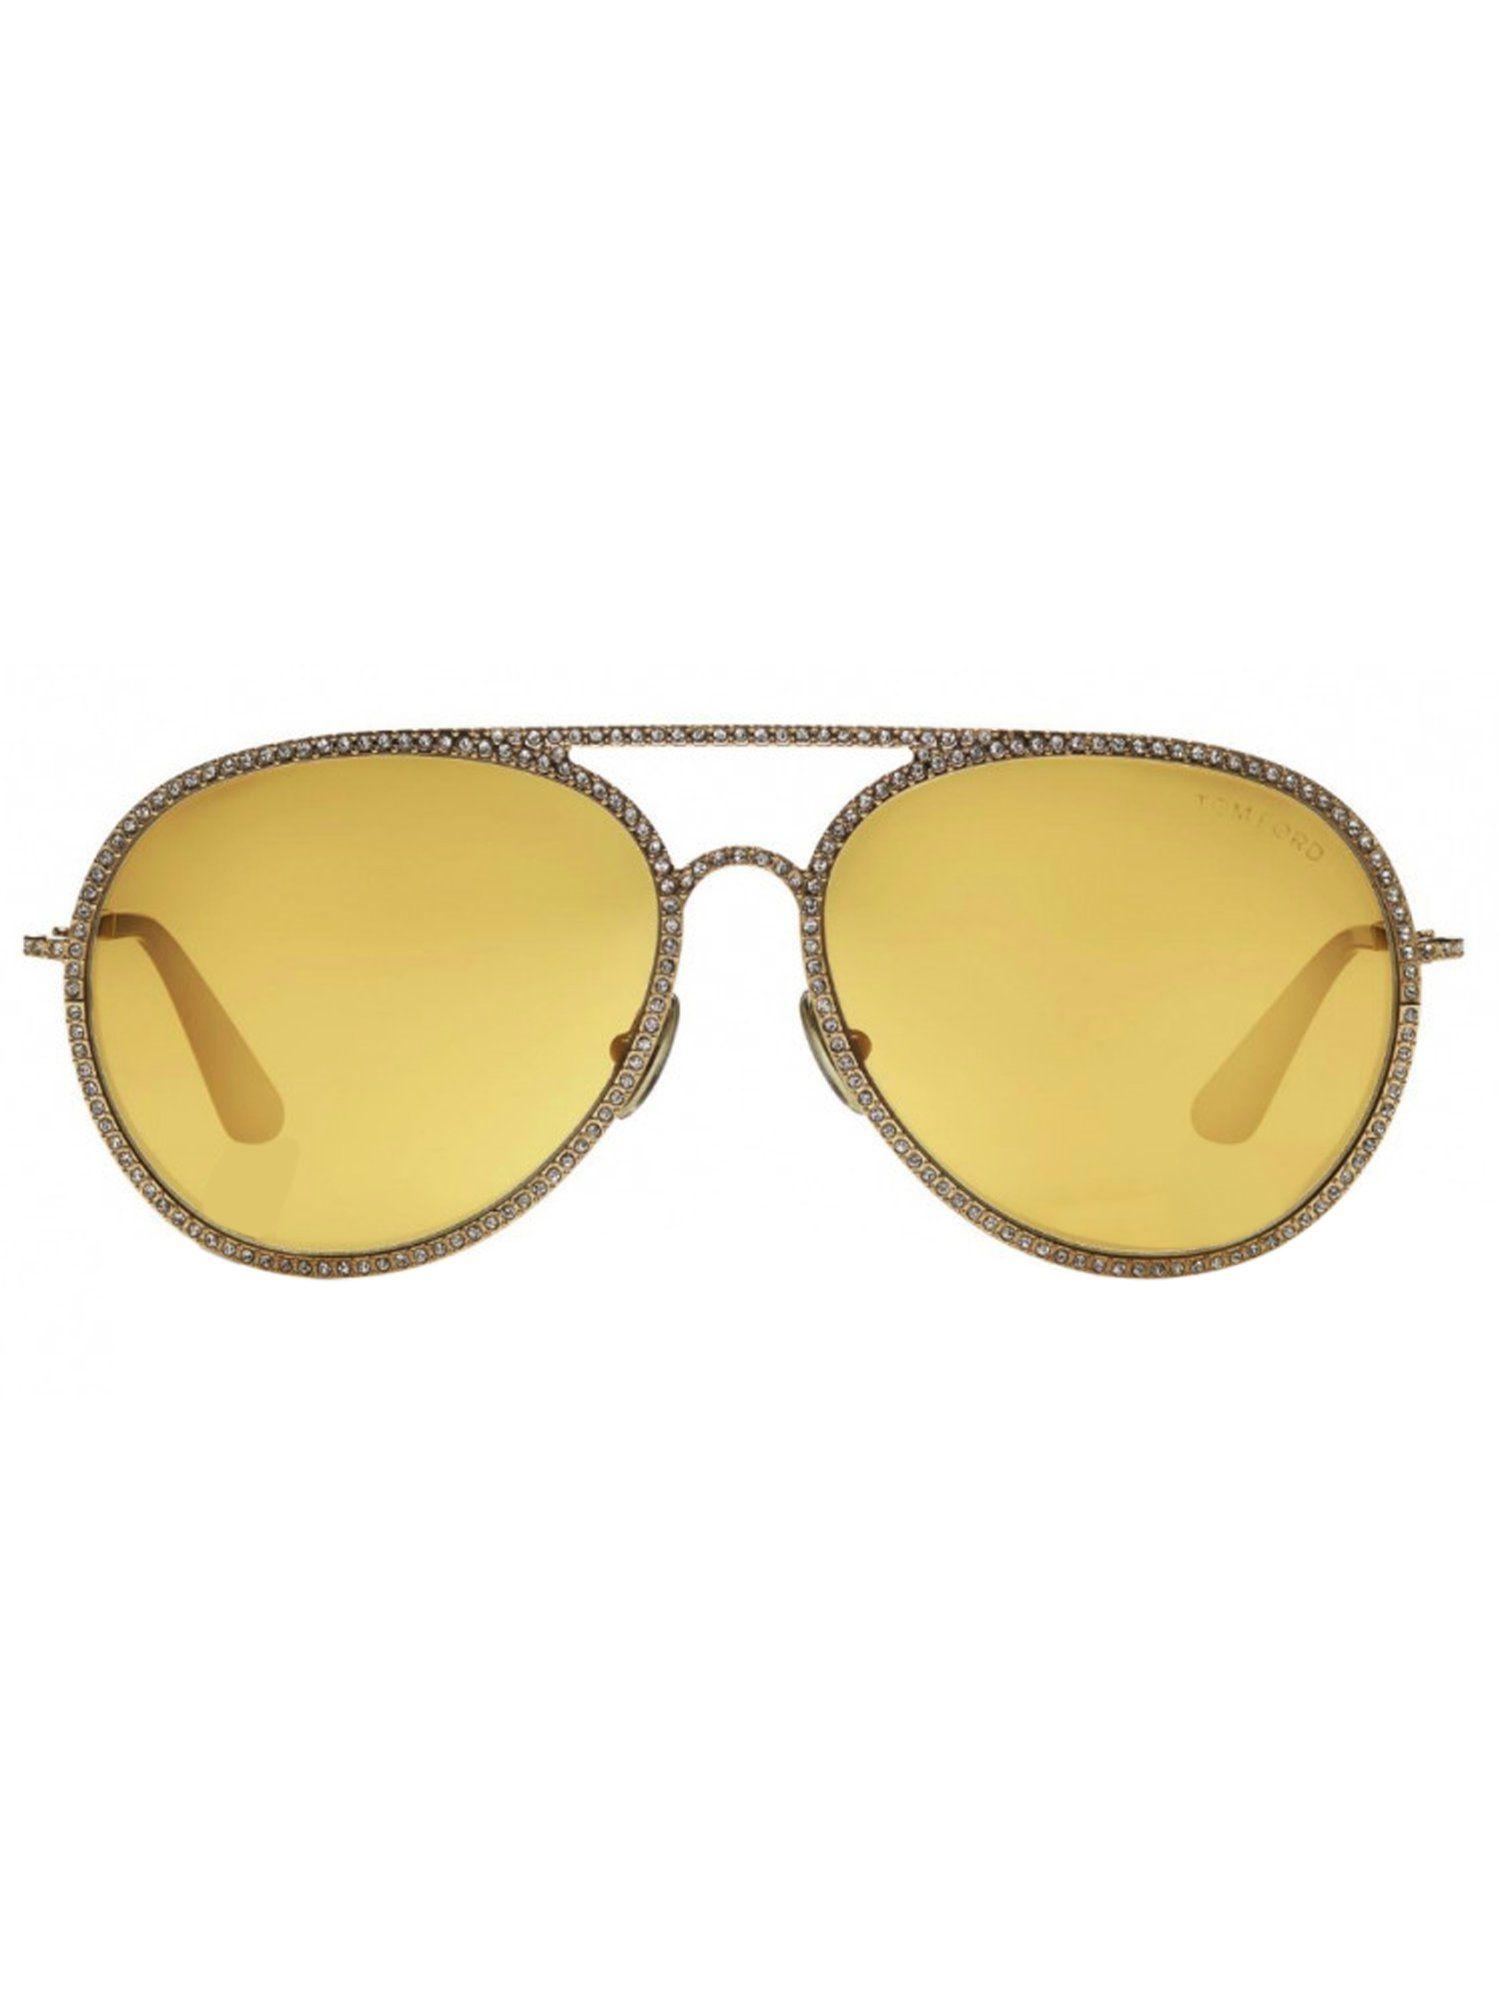 gold aviator sunglasses - ft0728 59 28g